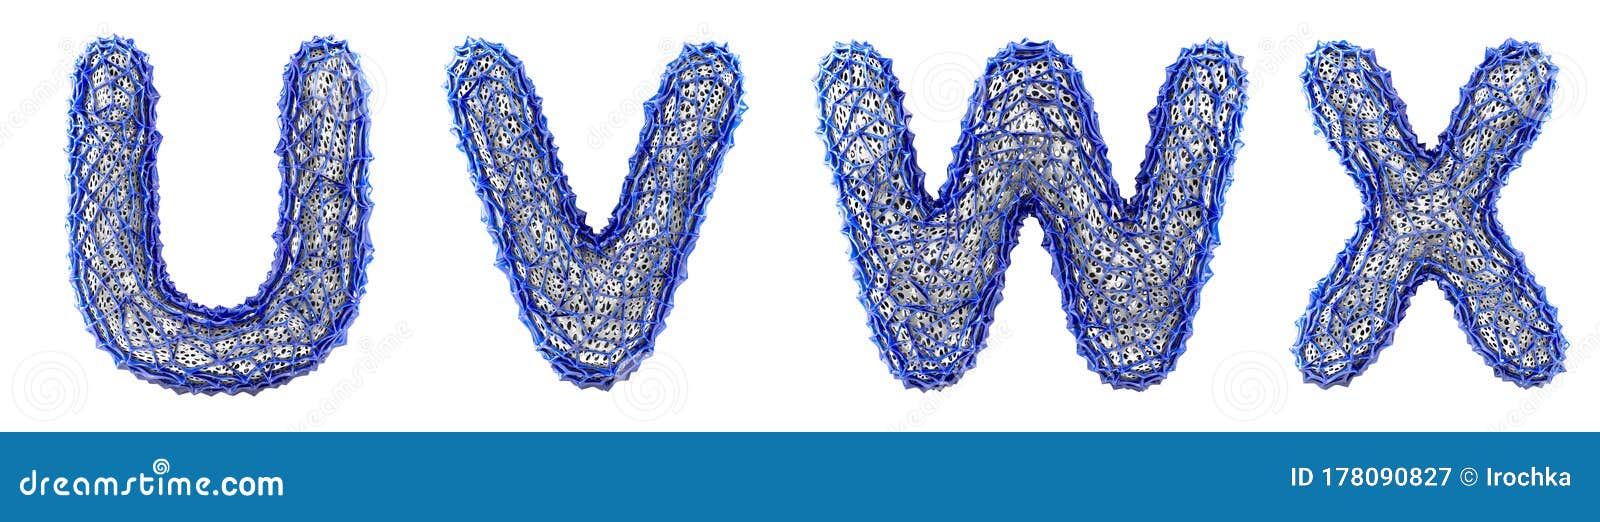 realistic 3d letters set u, v, w, x made of blue plastic.